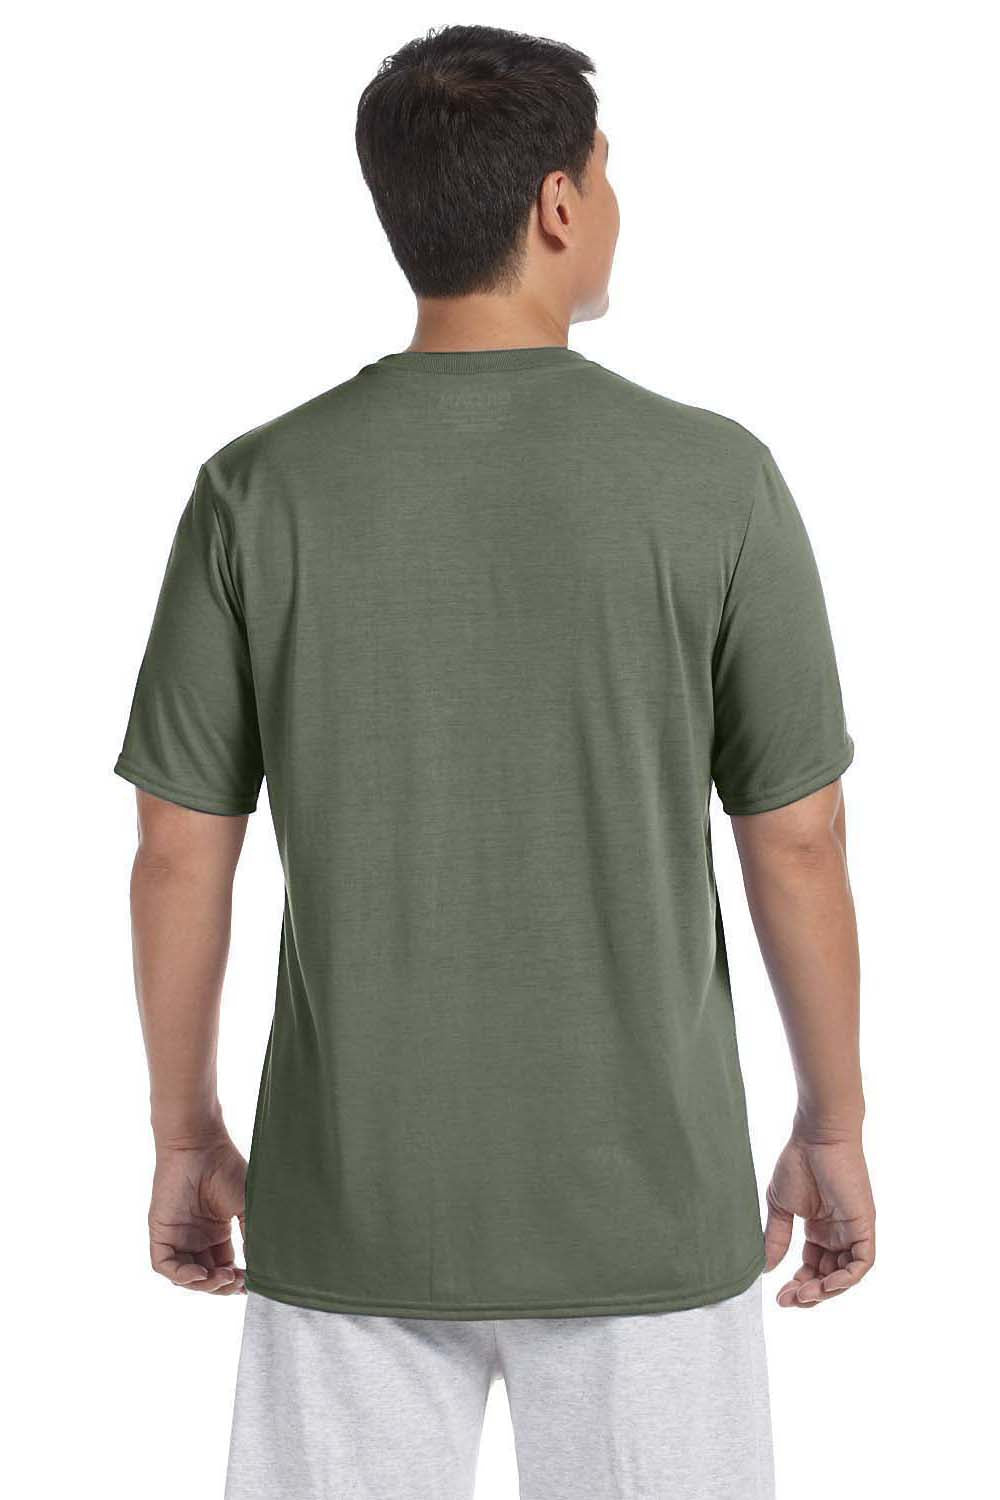 Gildan G420 Mens Performance Jersey Moisture Wicking Short Sleeve Crewneck T-Shirt Military Green Back